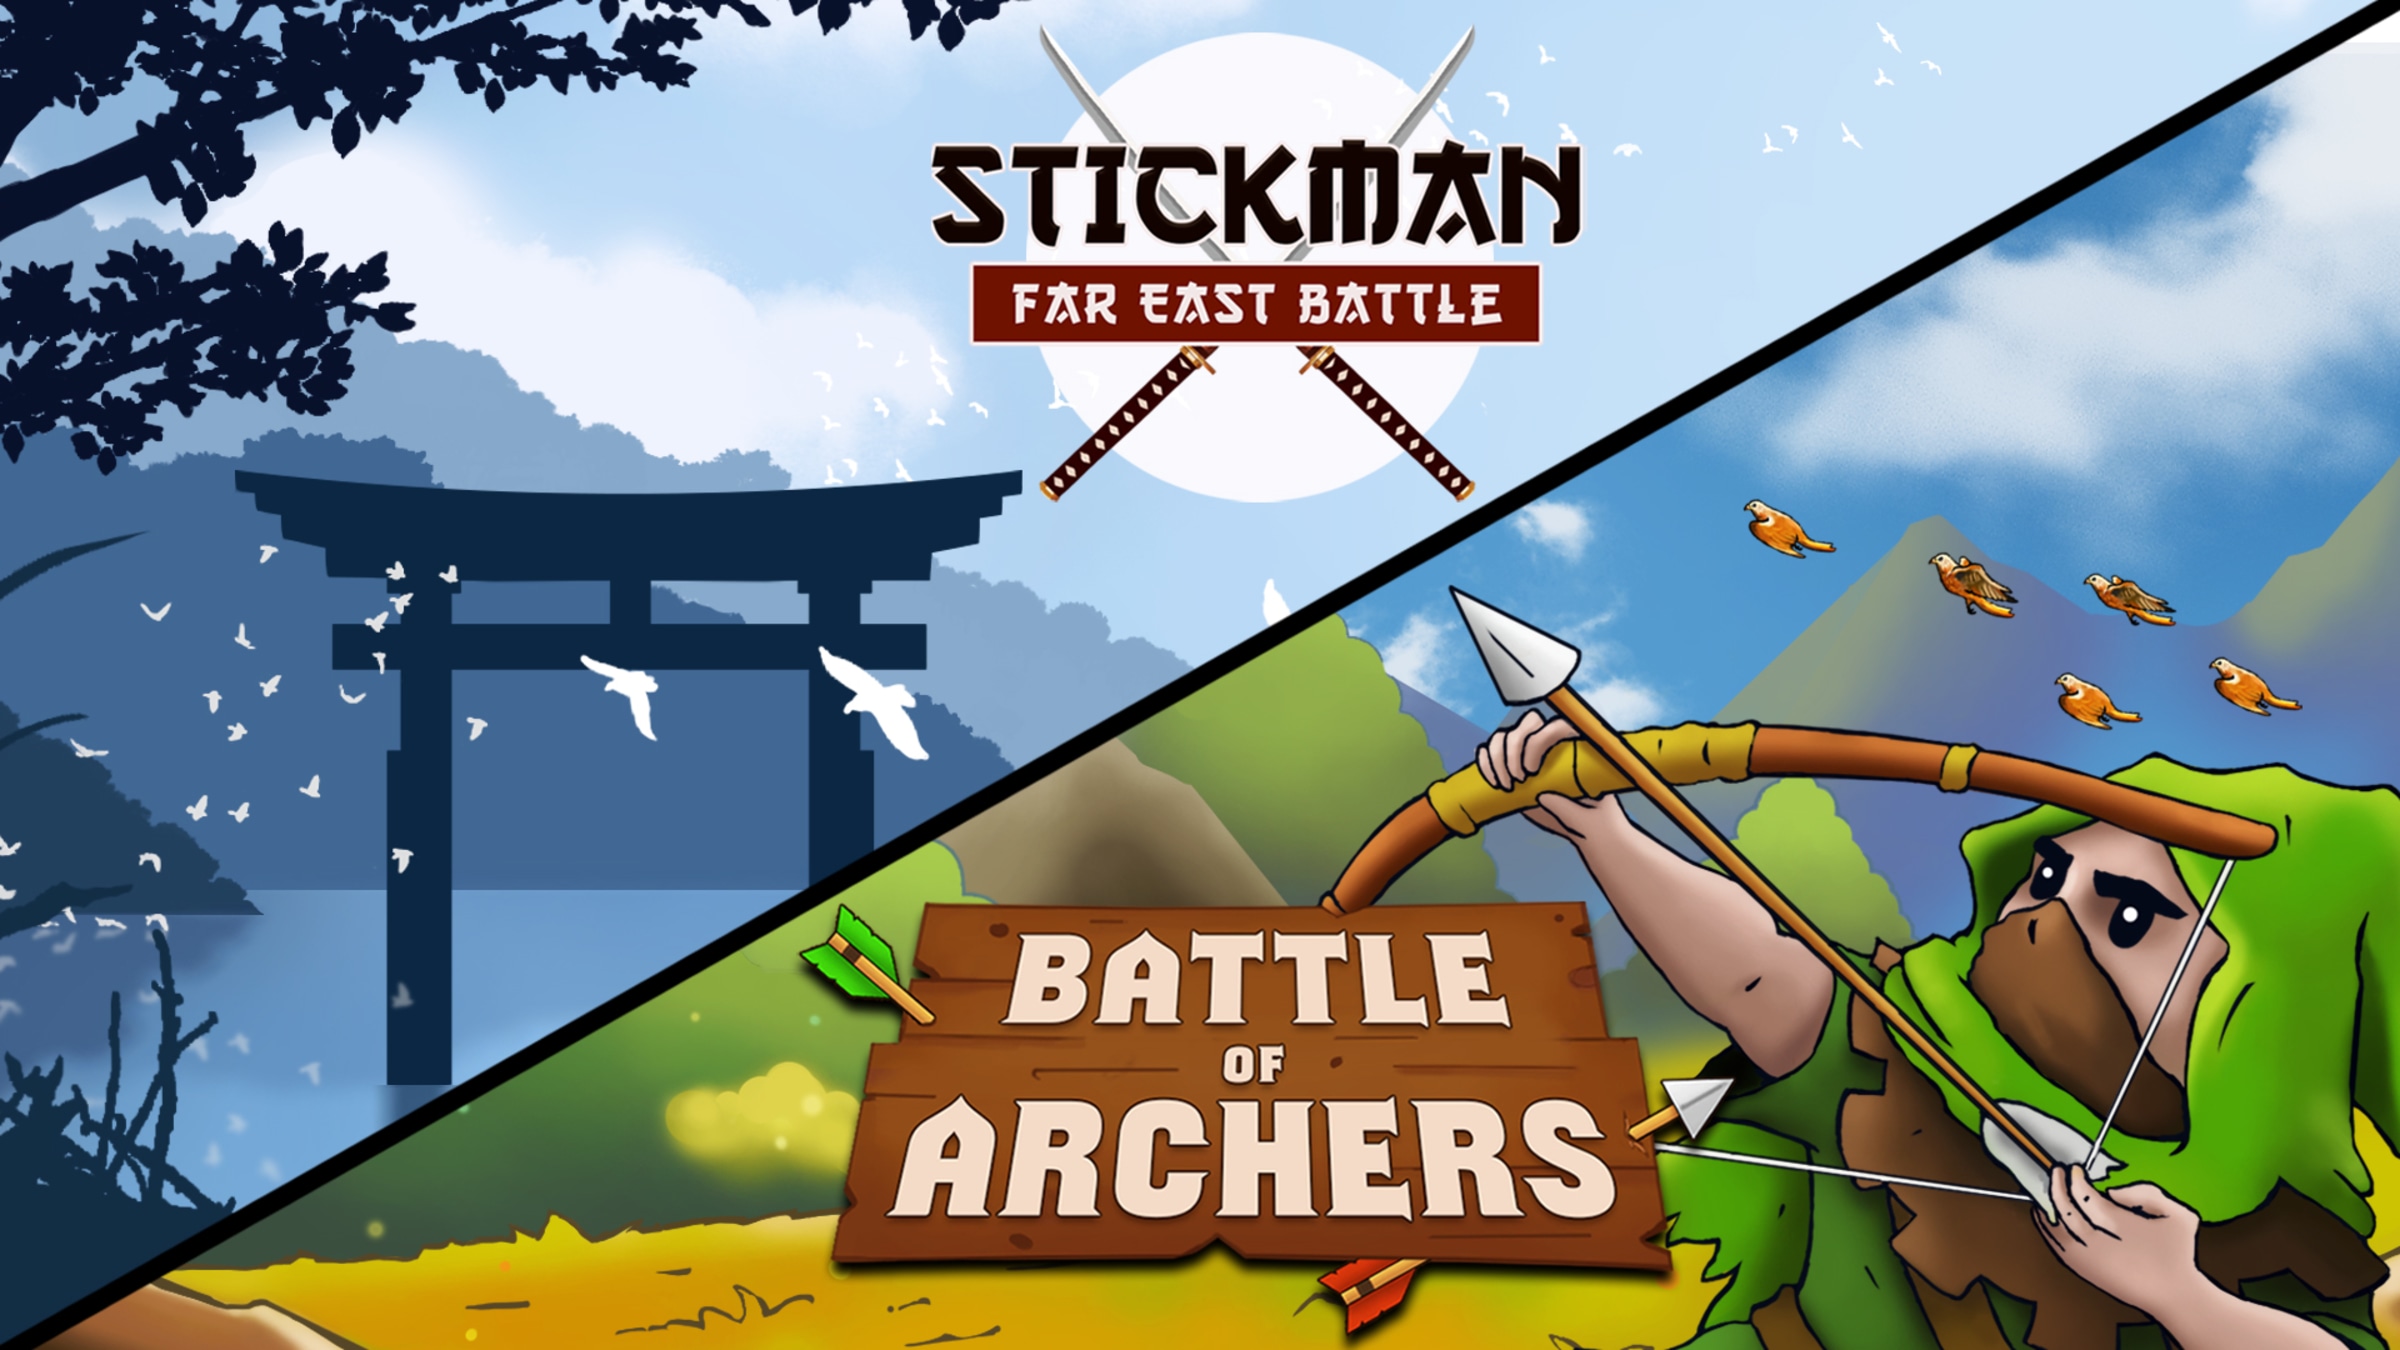 Battle Bundle Stickman Far East Battle and Battle of Archers for Nintendo Switch